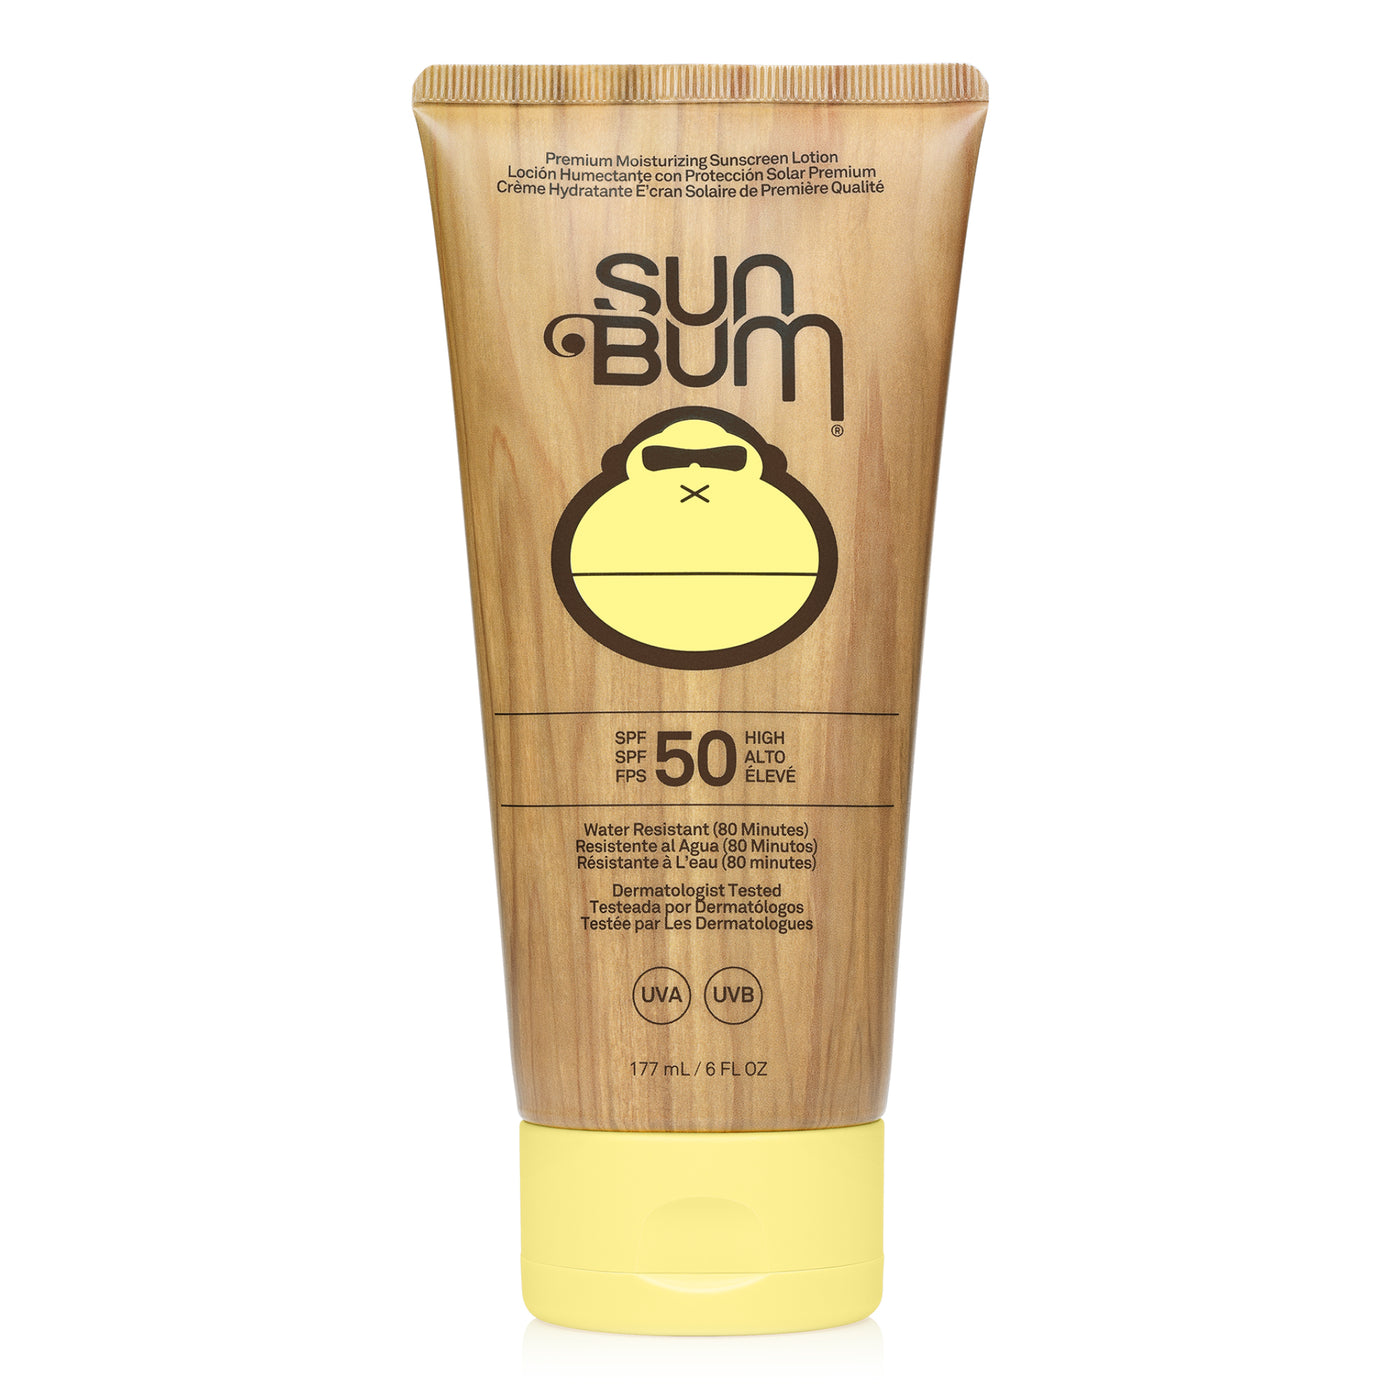 Sun Bum Original SPF 50 Lotion 177ml